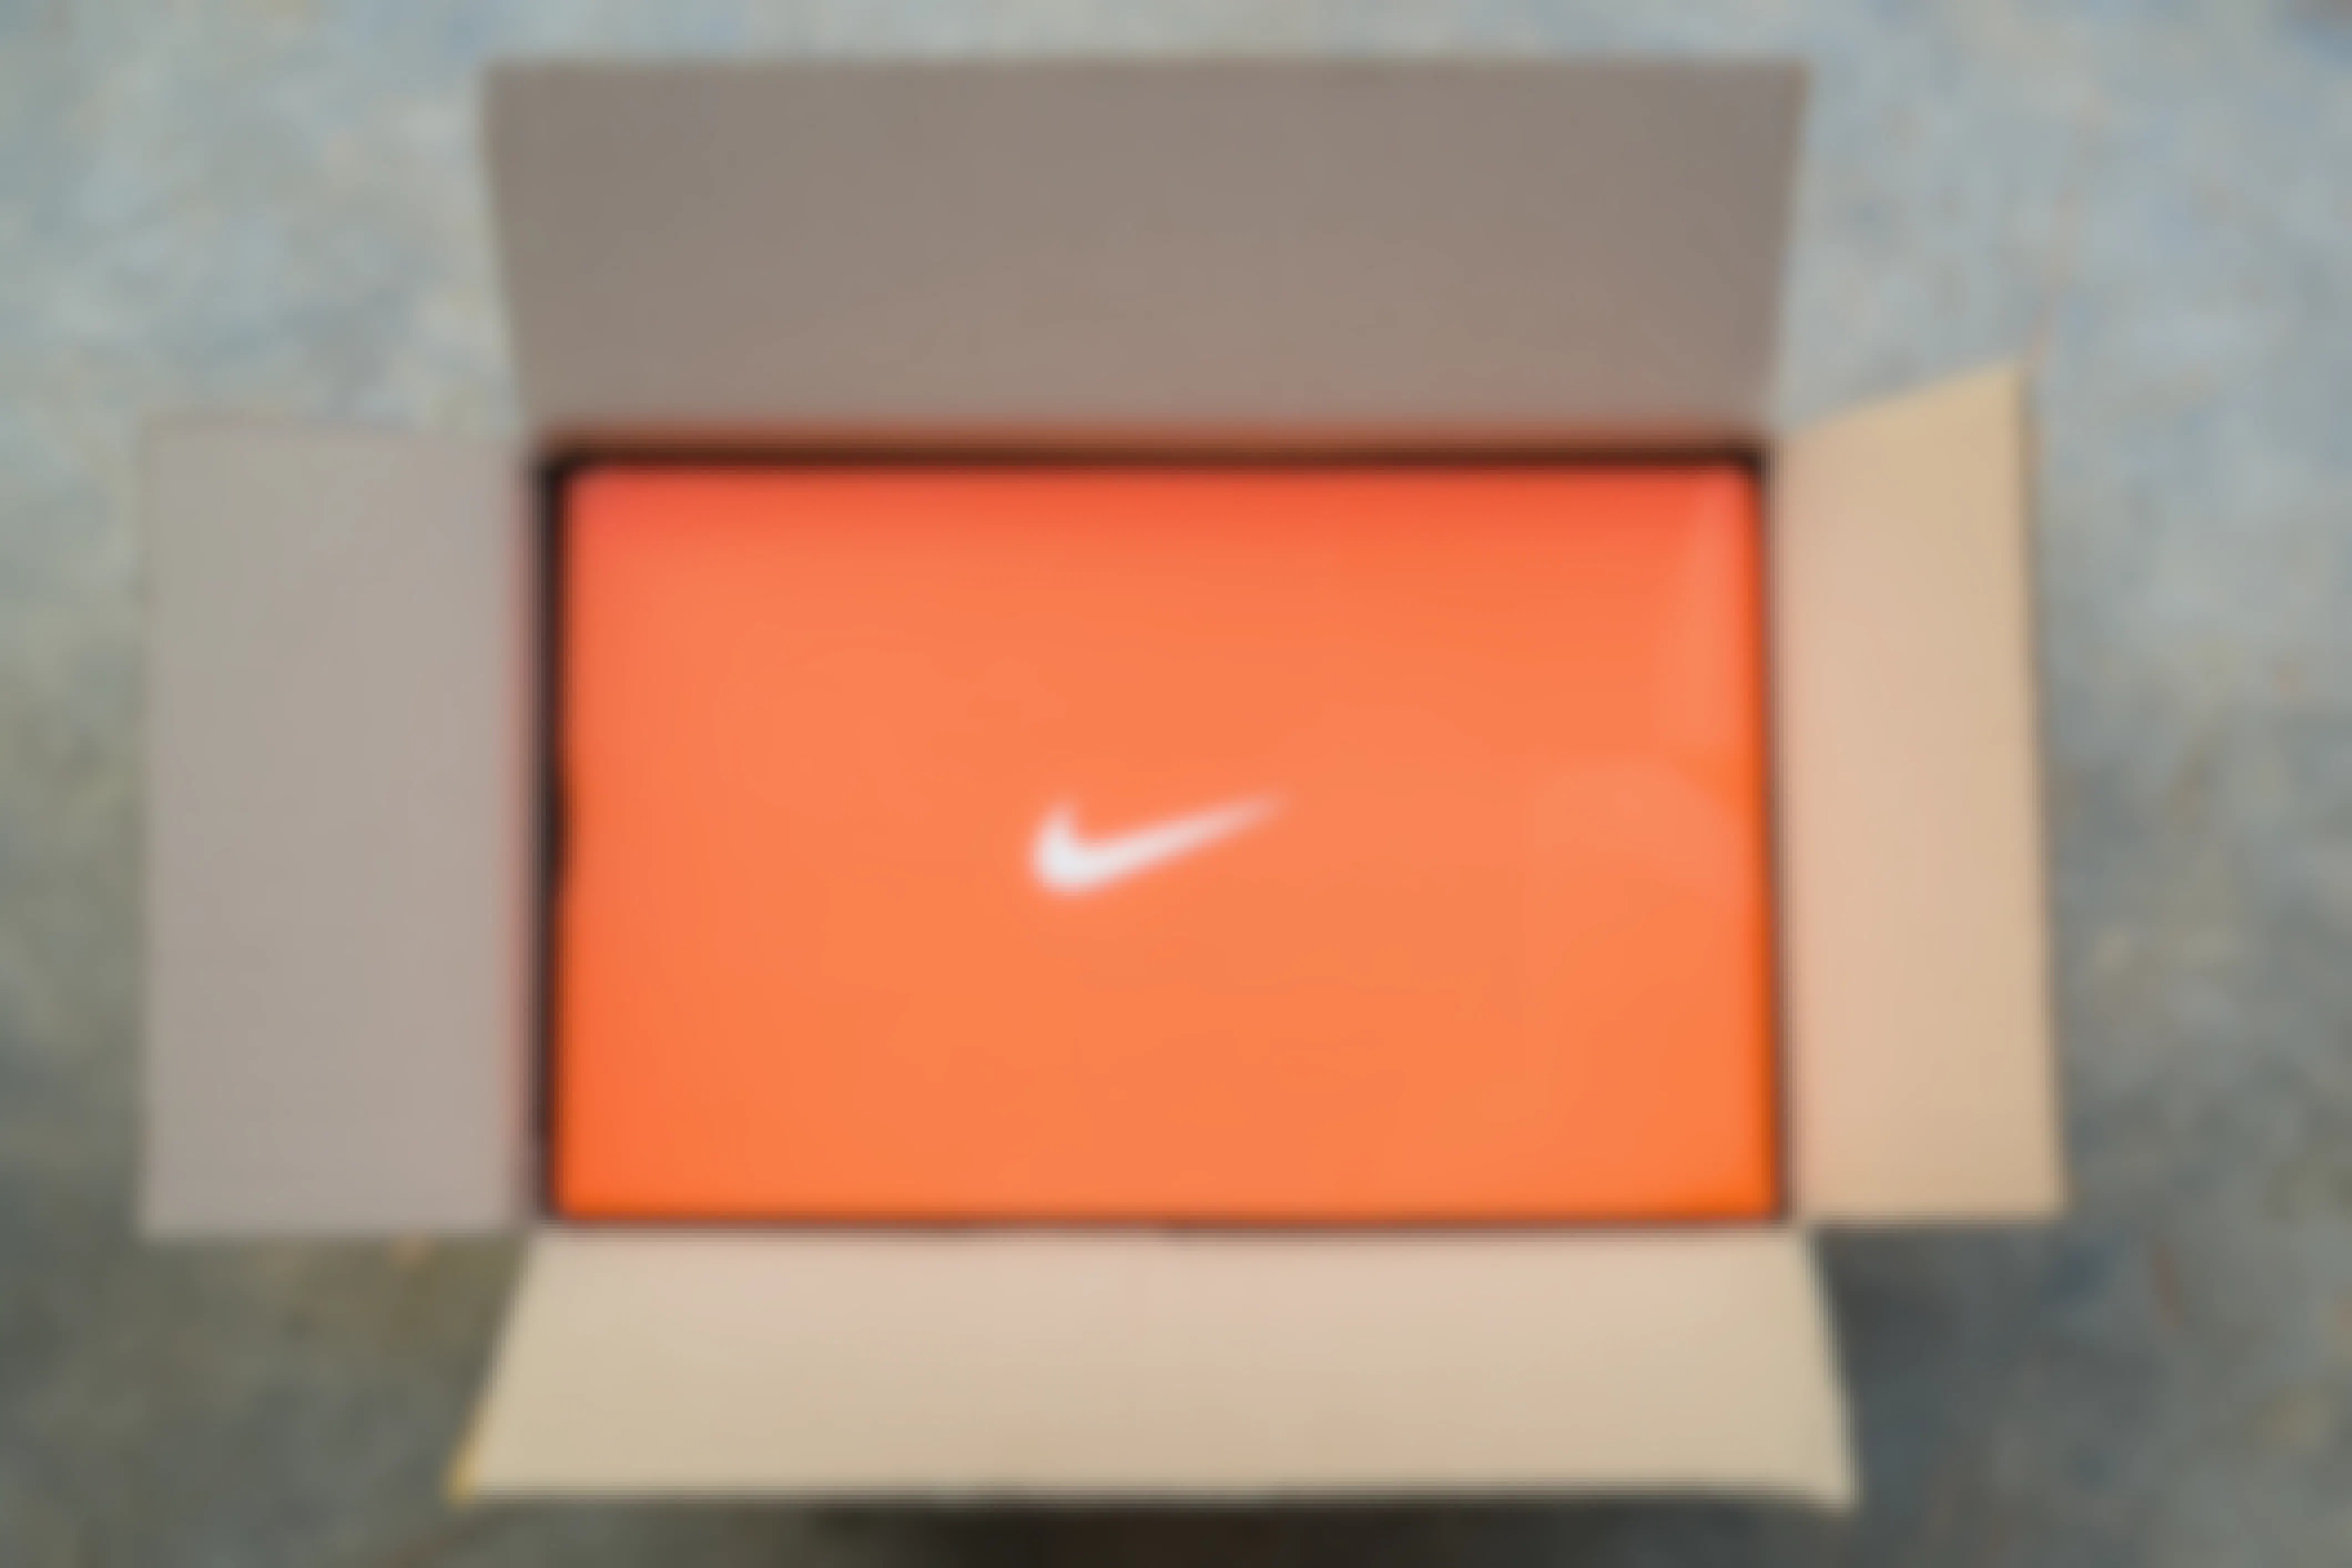 A cardboard box open on the floor with an orange nike shoe box inside.